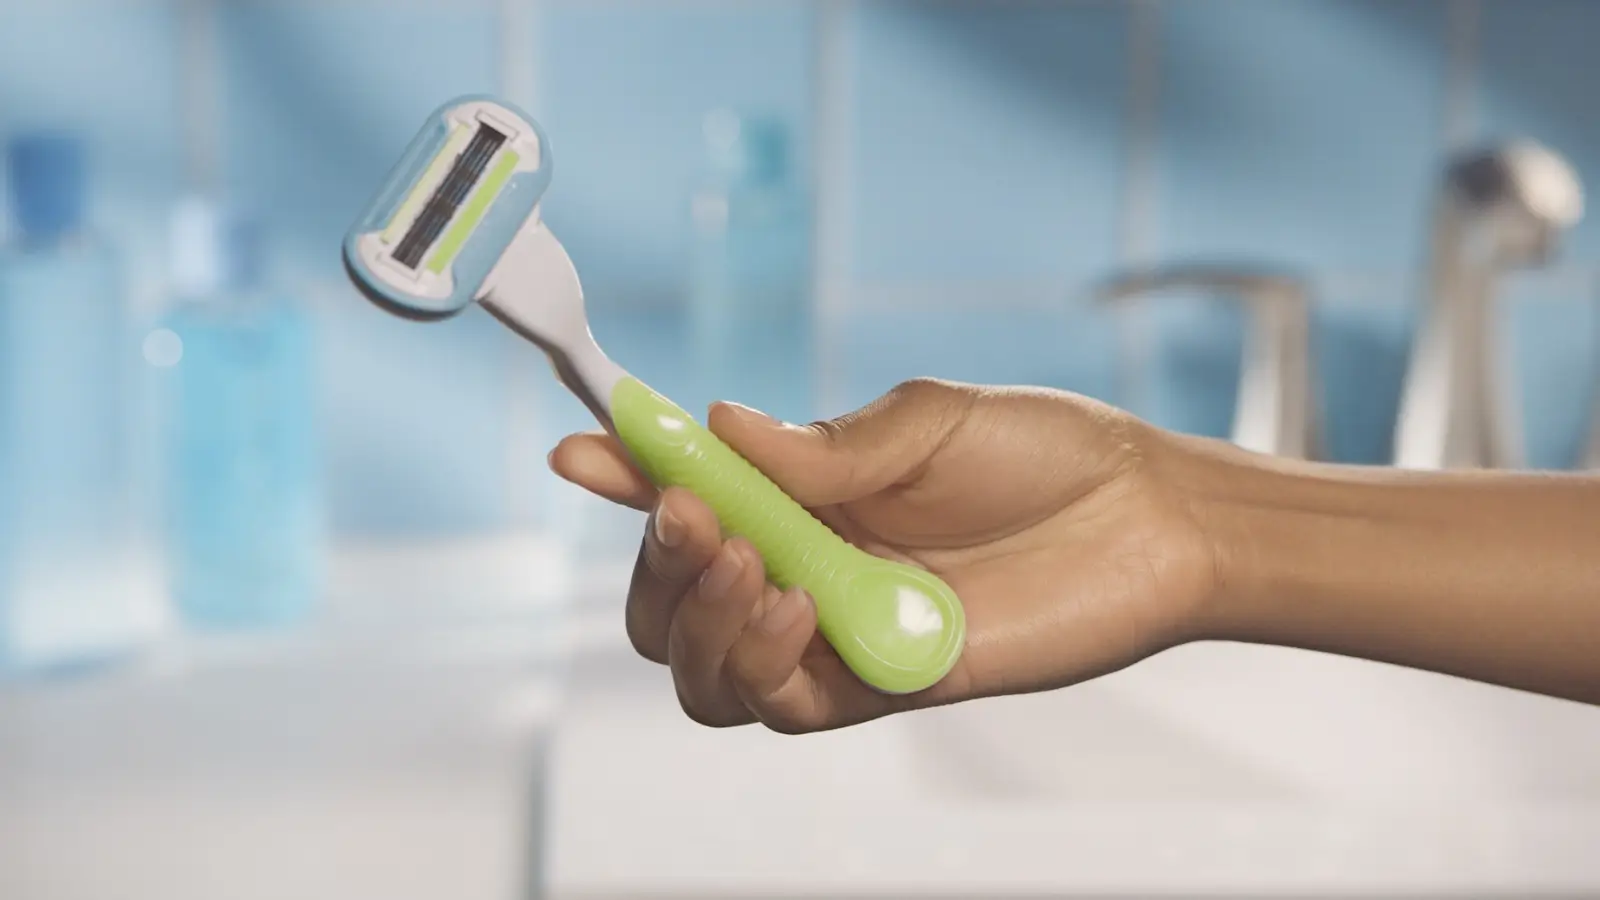 Women hand holding a green razor with an oval razor head